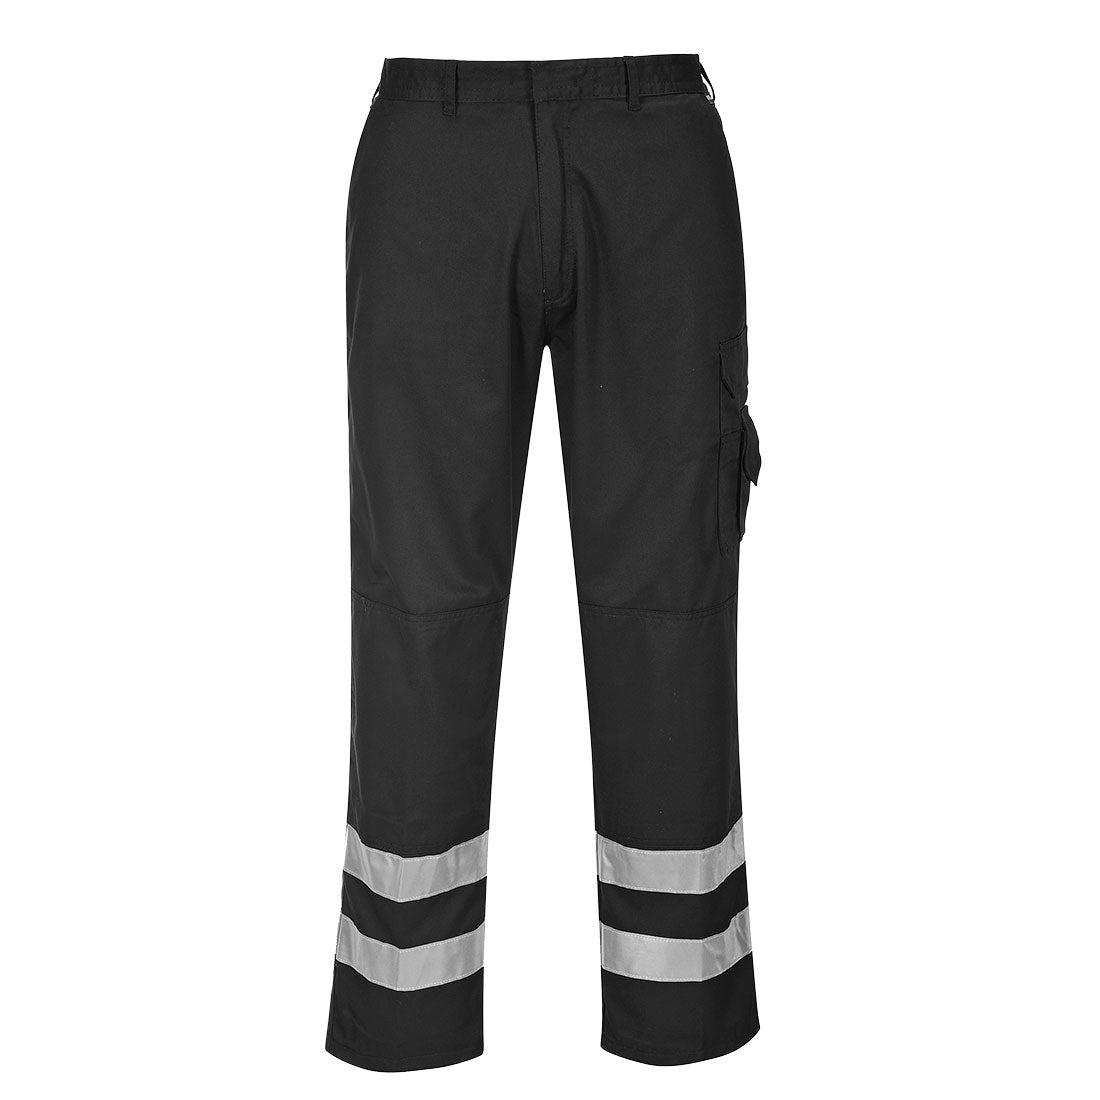 S917 - Pantalon Iona Safety Combat